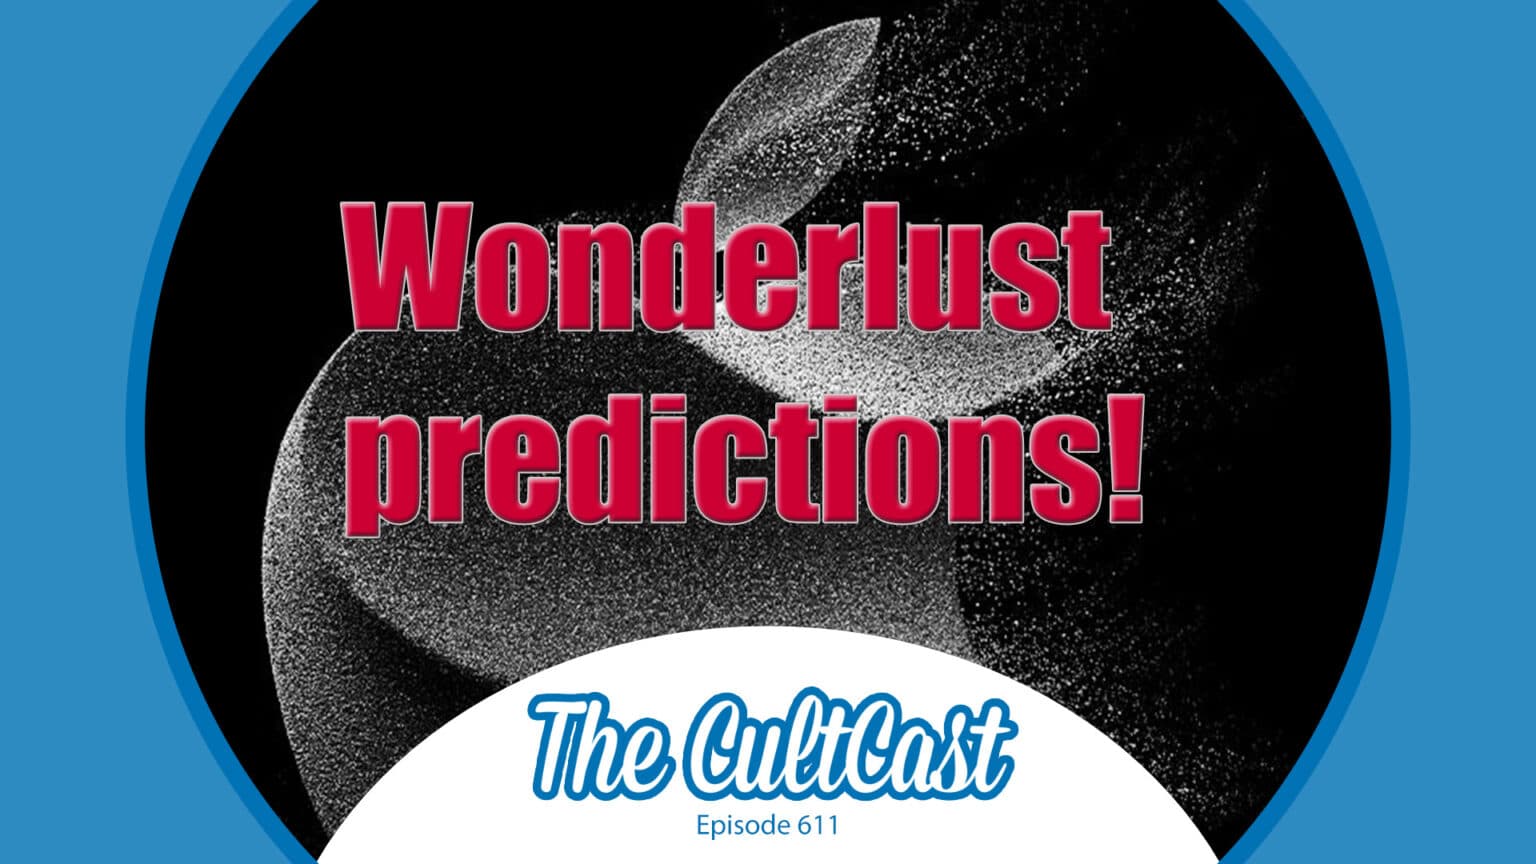 Apple Wonderlust event predictions on The CultCast episode 611.